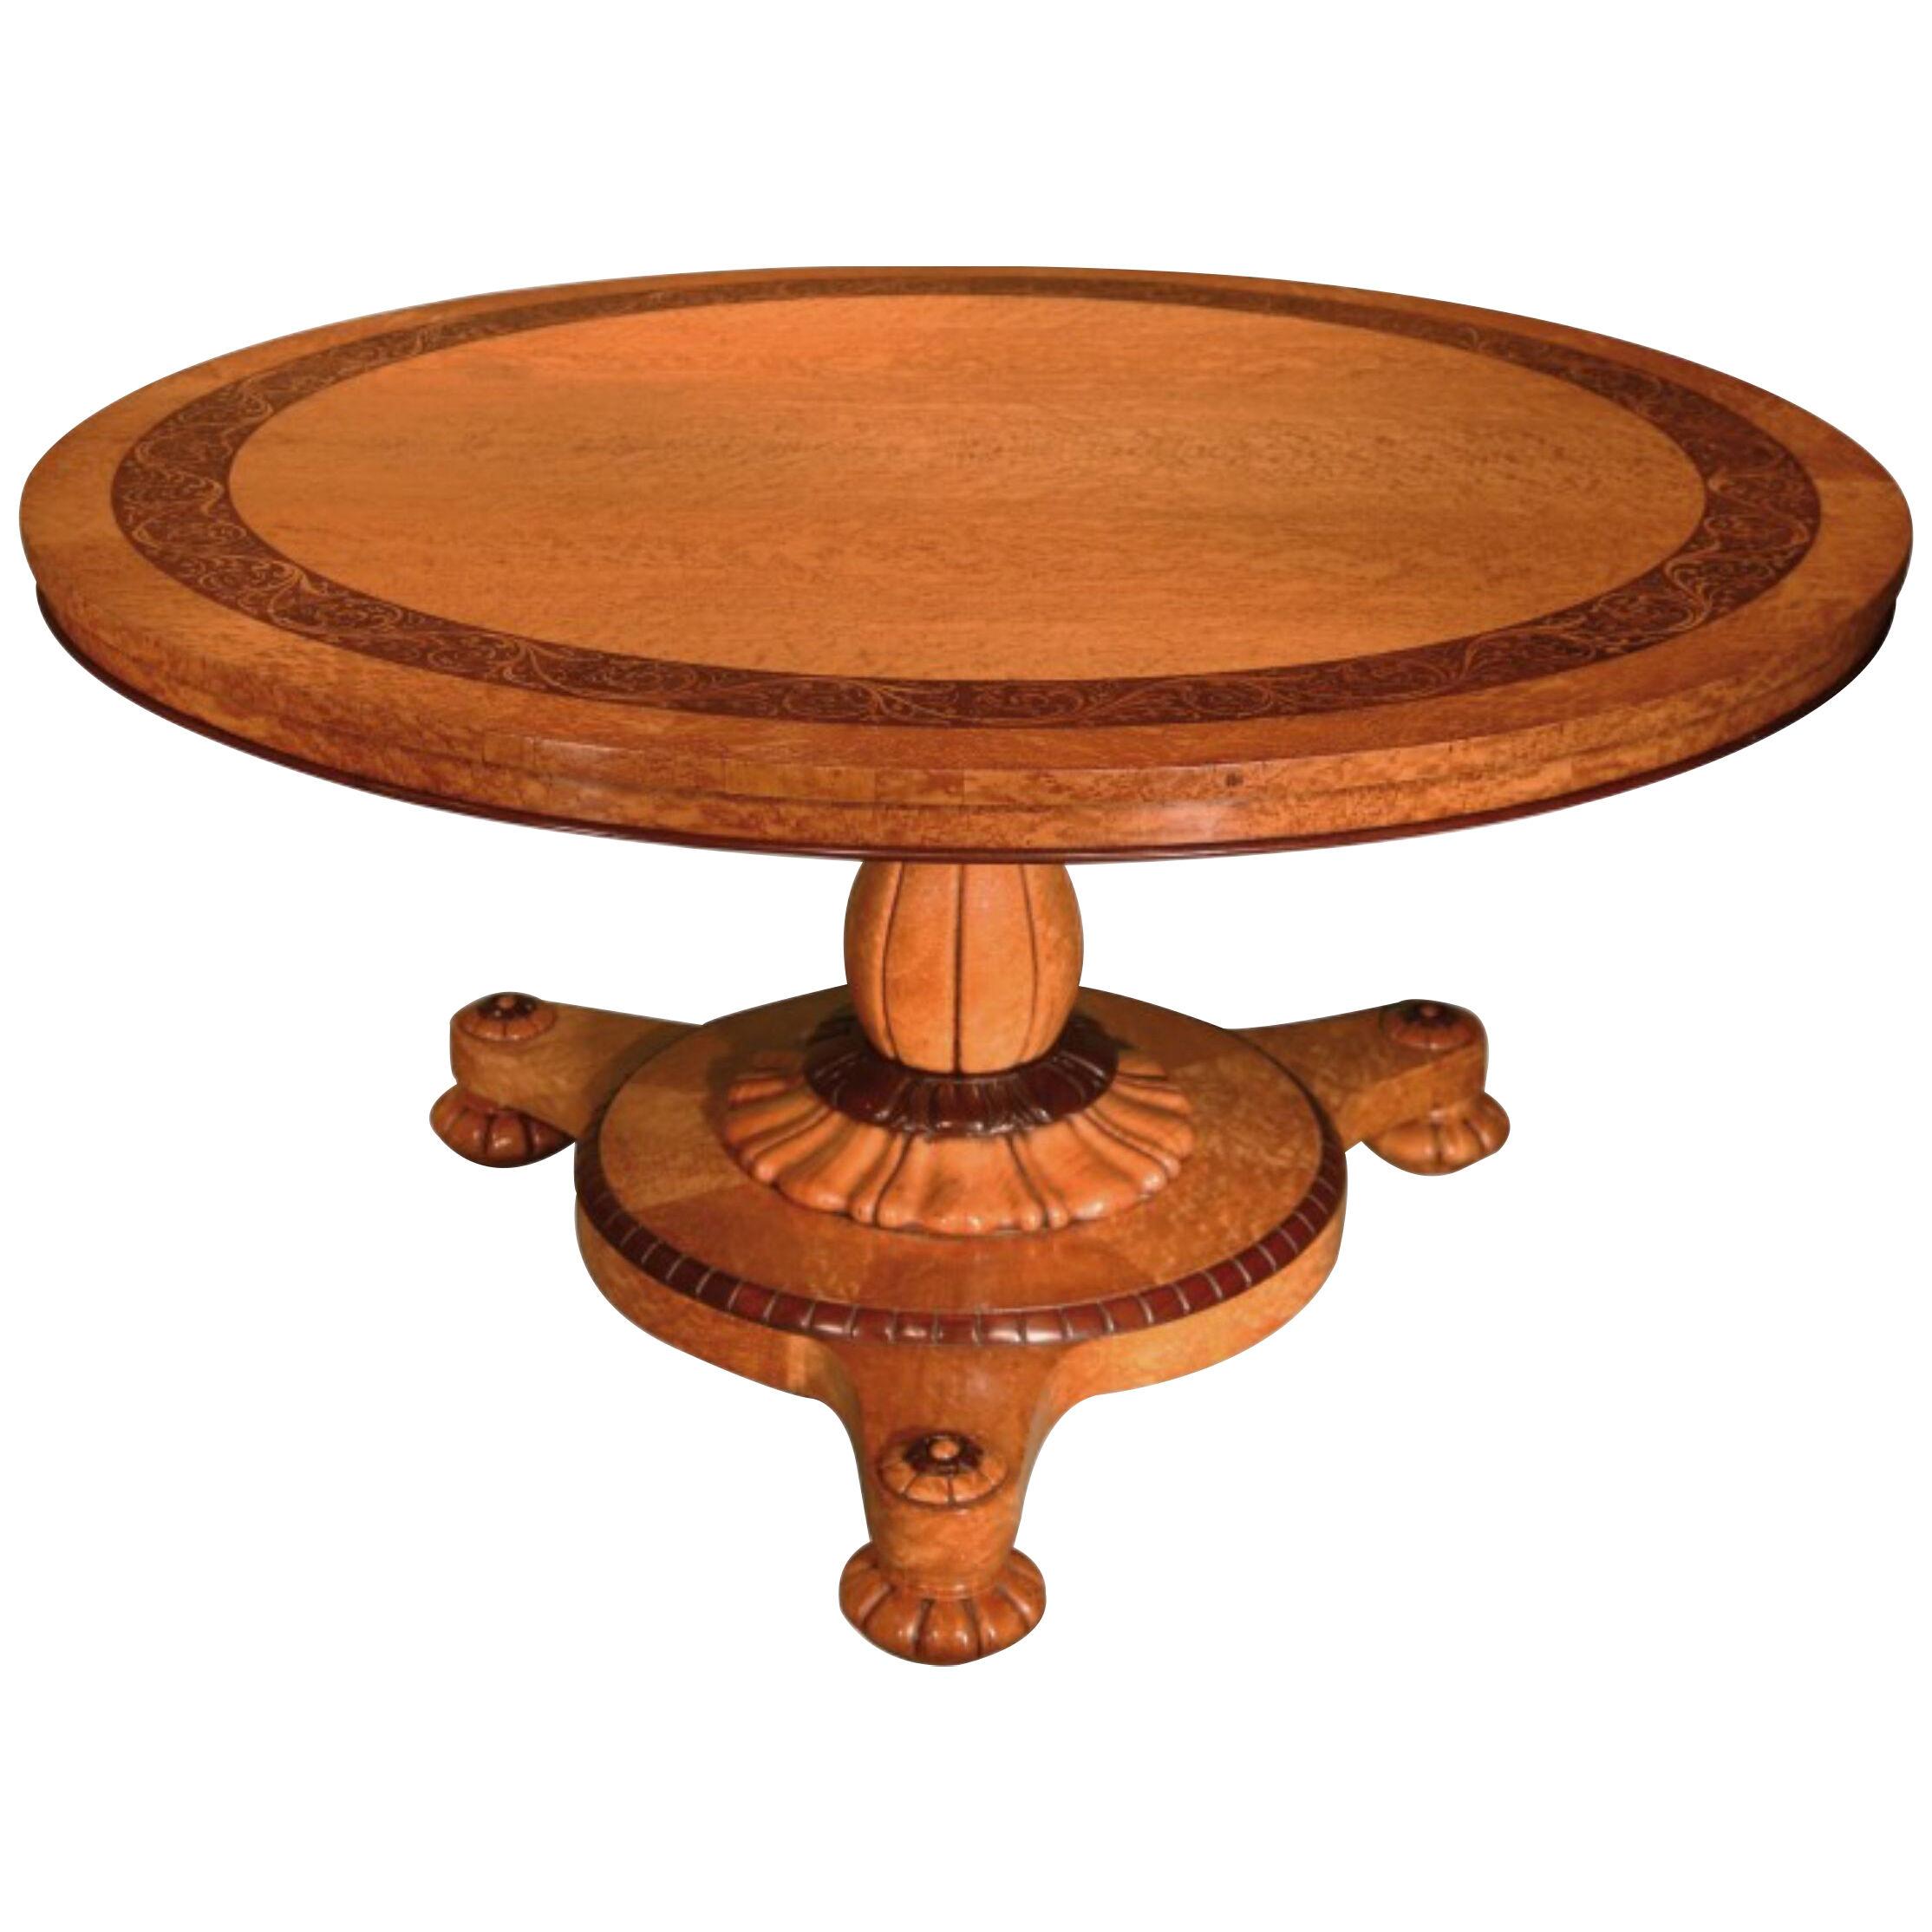 A Fine Mid 19th Century Birdseye Maple Centre Table